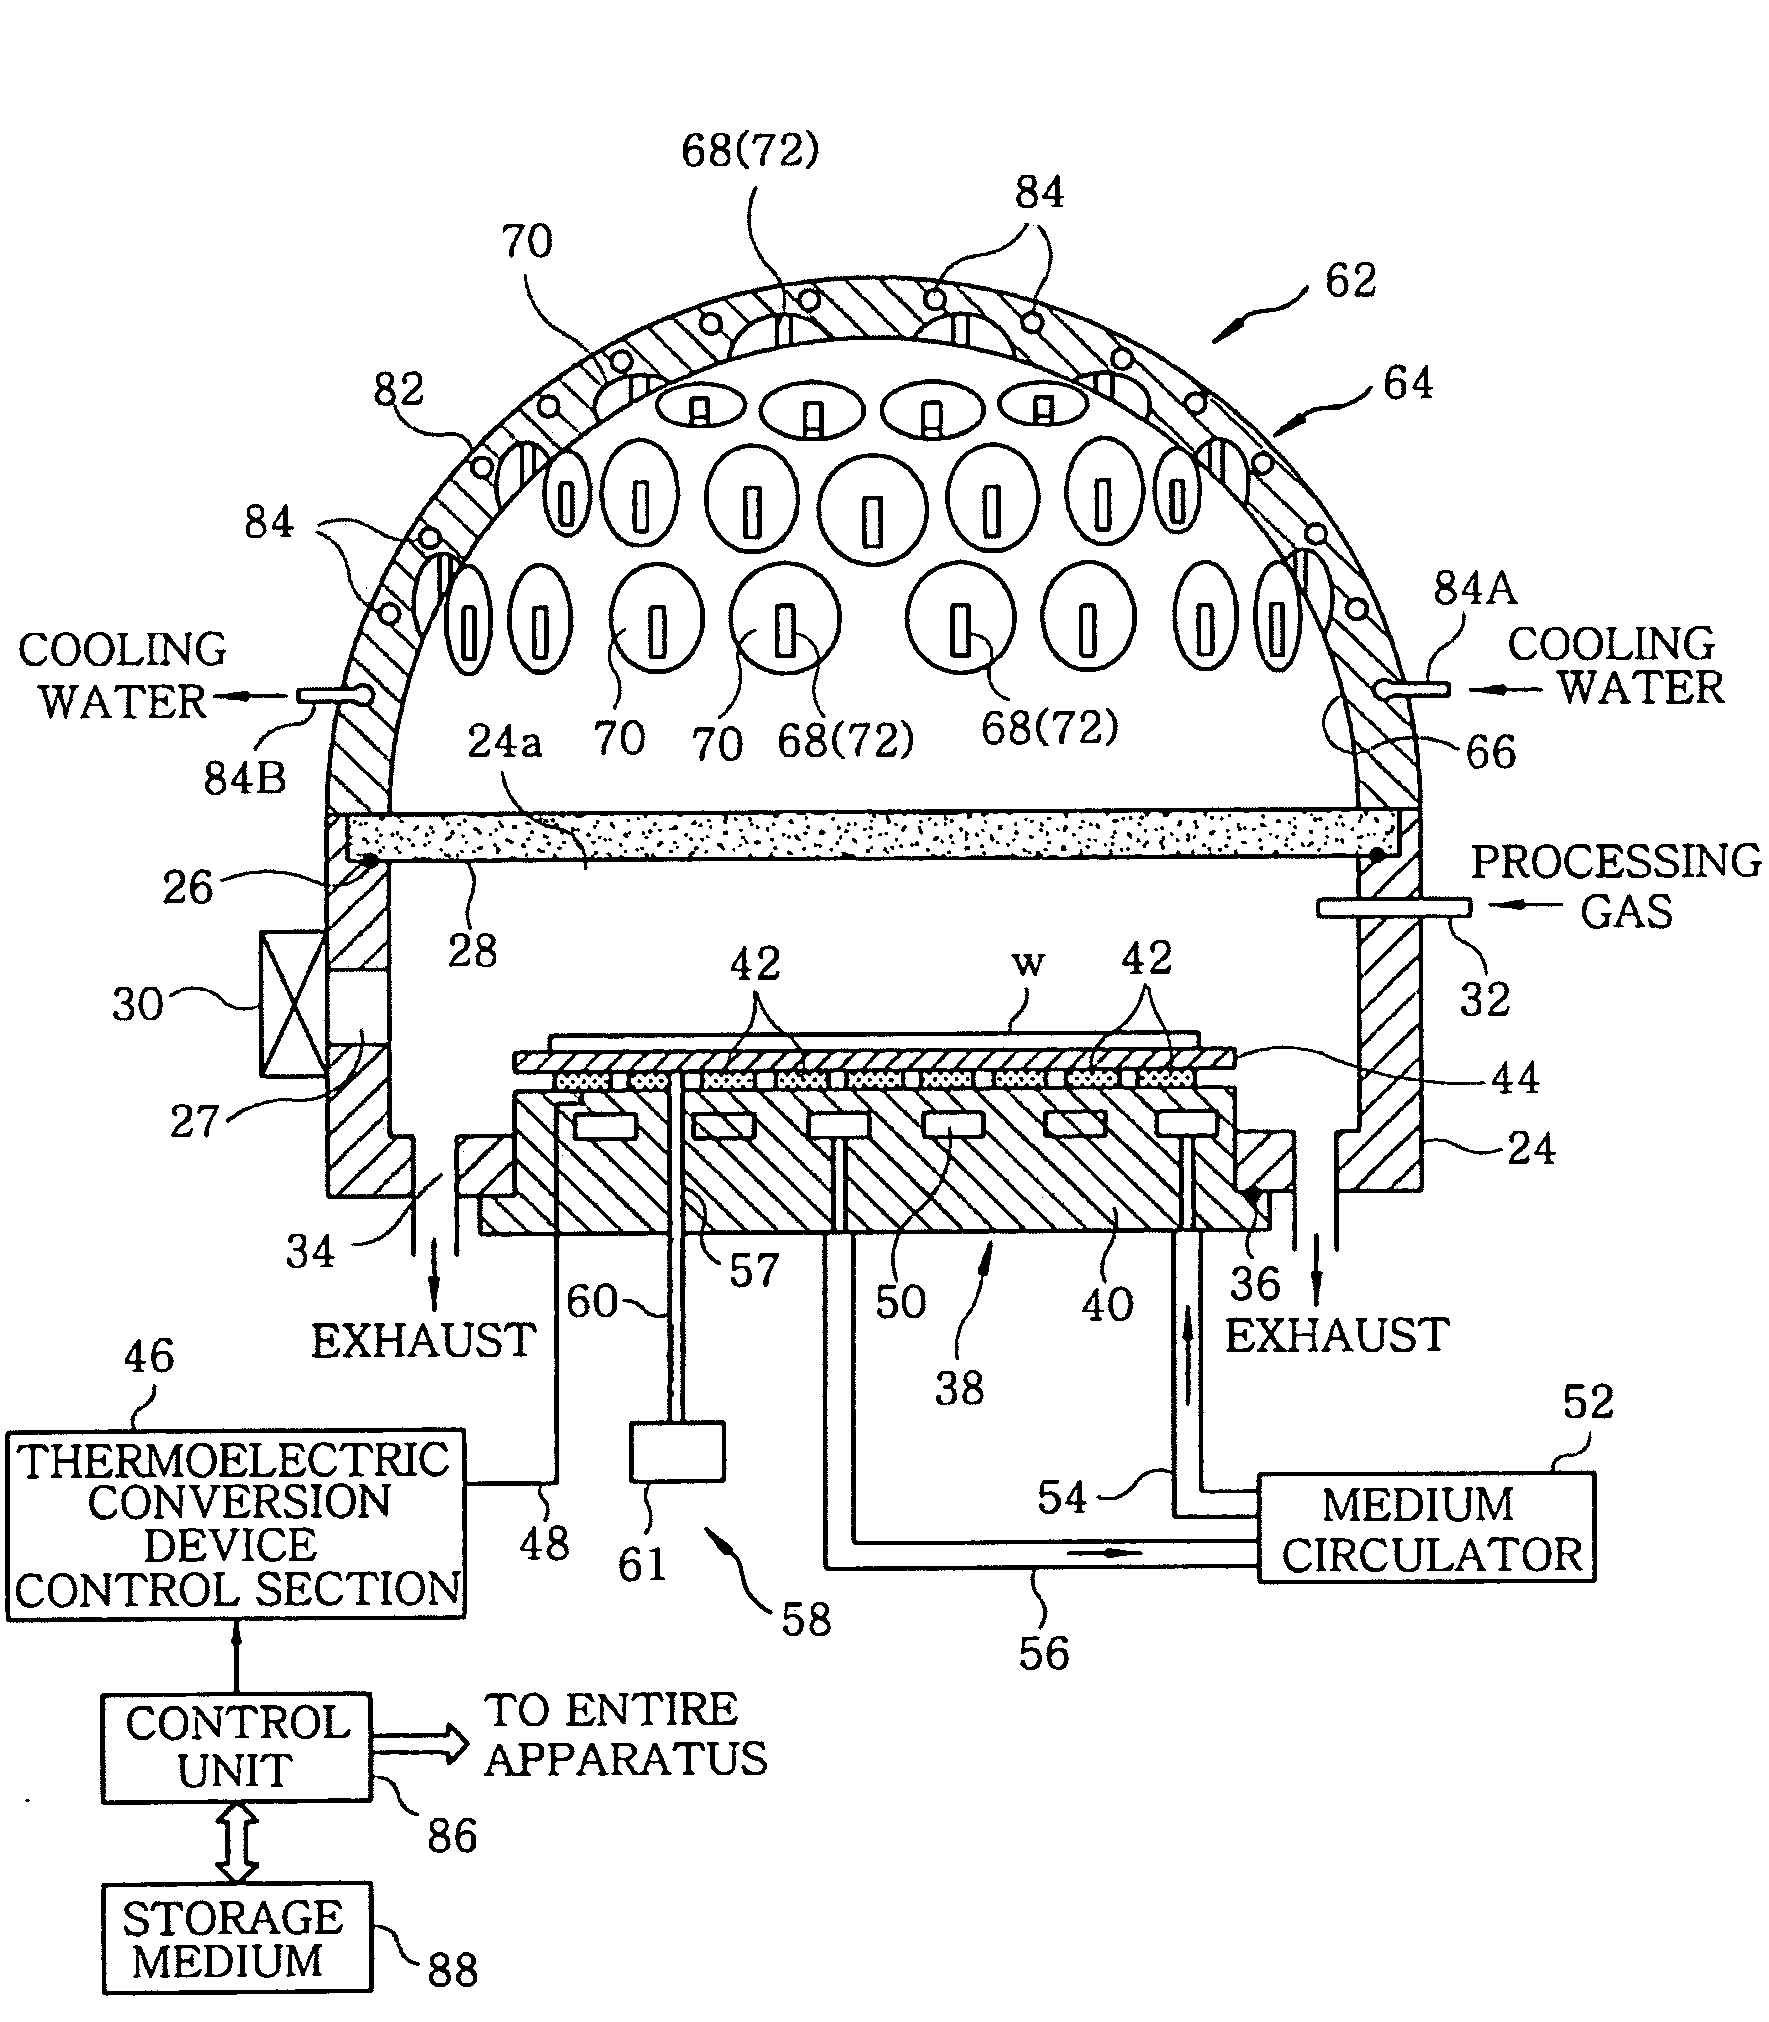 Heating apparatus, heat treatment apparatus, computer program and storage medium